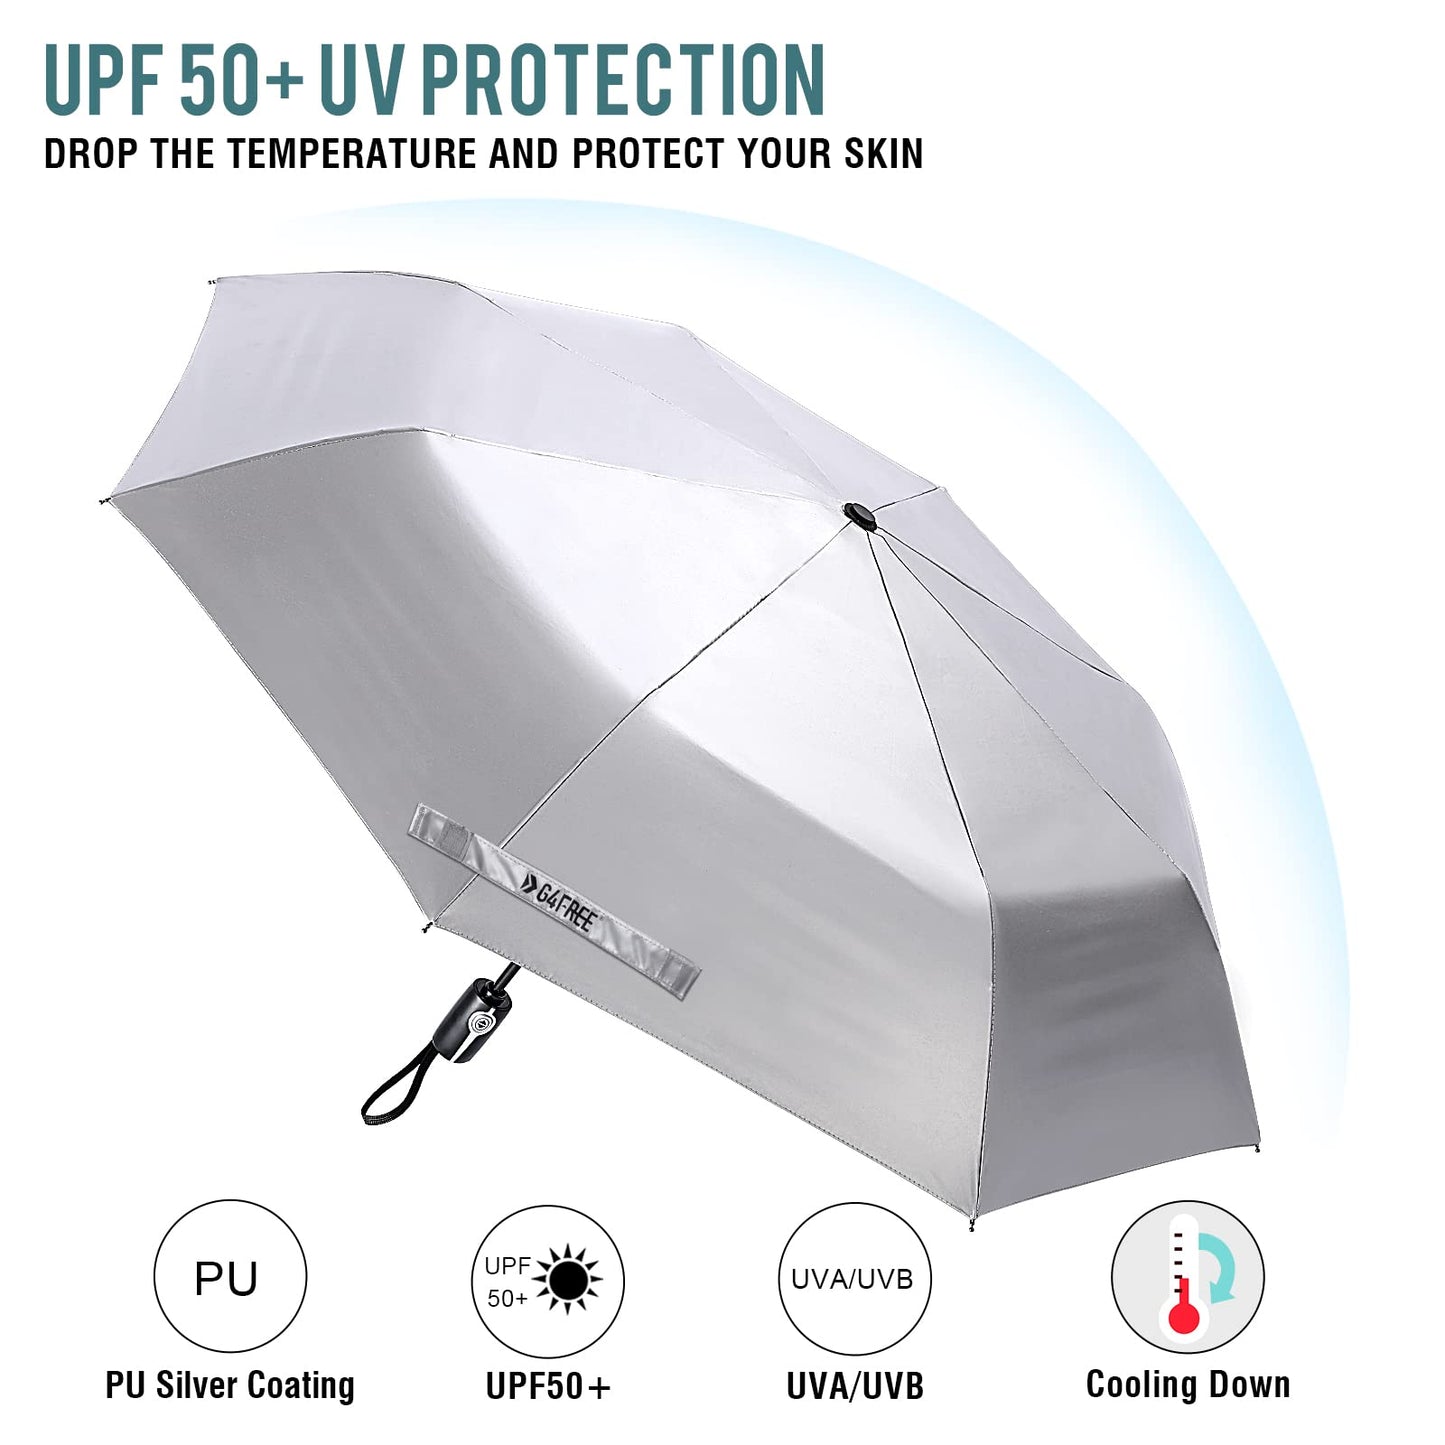 G4Free 46 Inch Auto Open UPF 50+ UV Protection Large Travel Umbrella